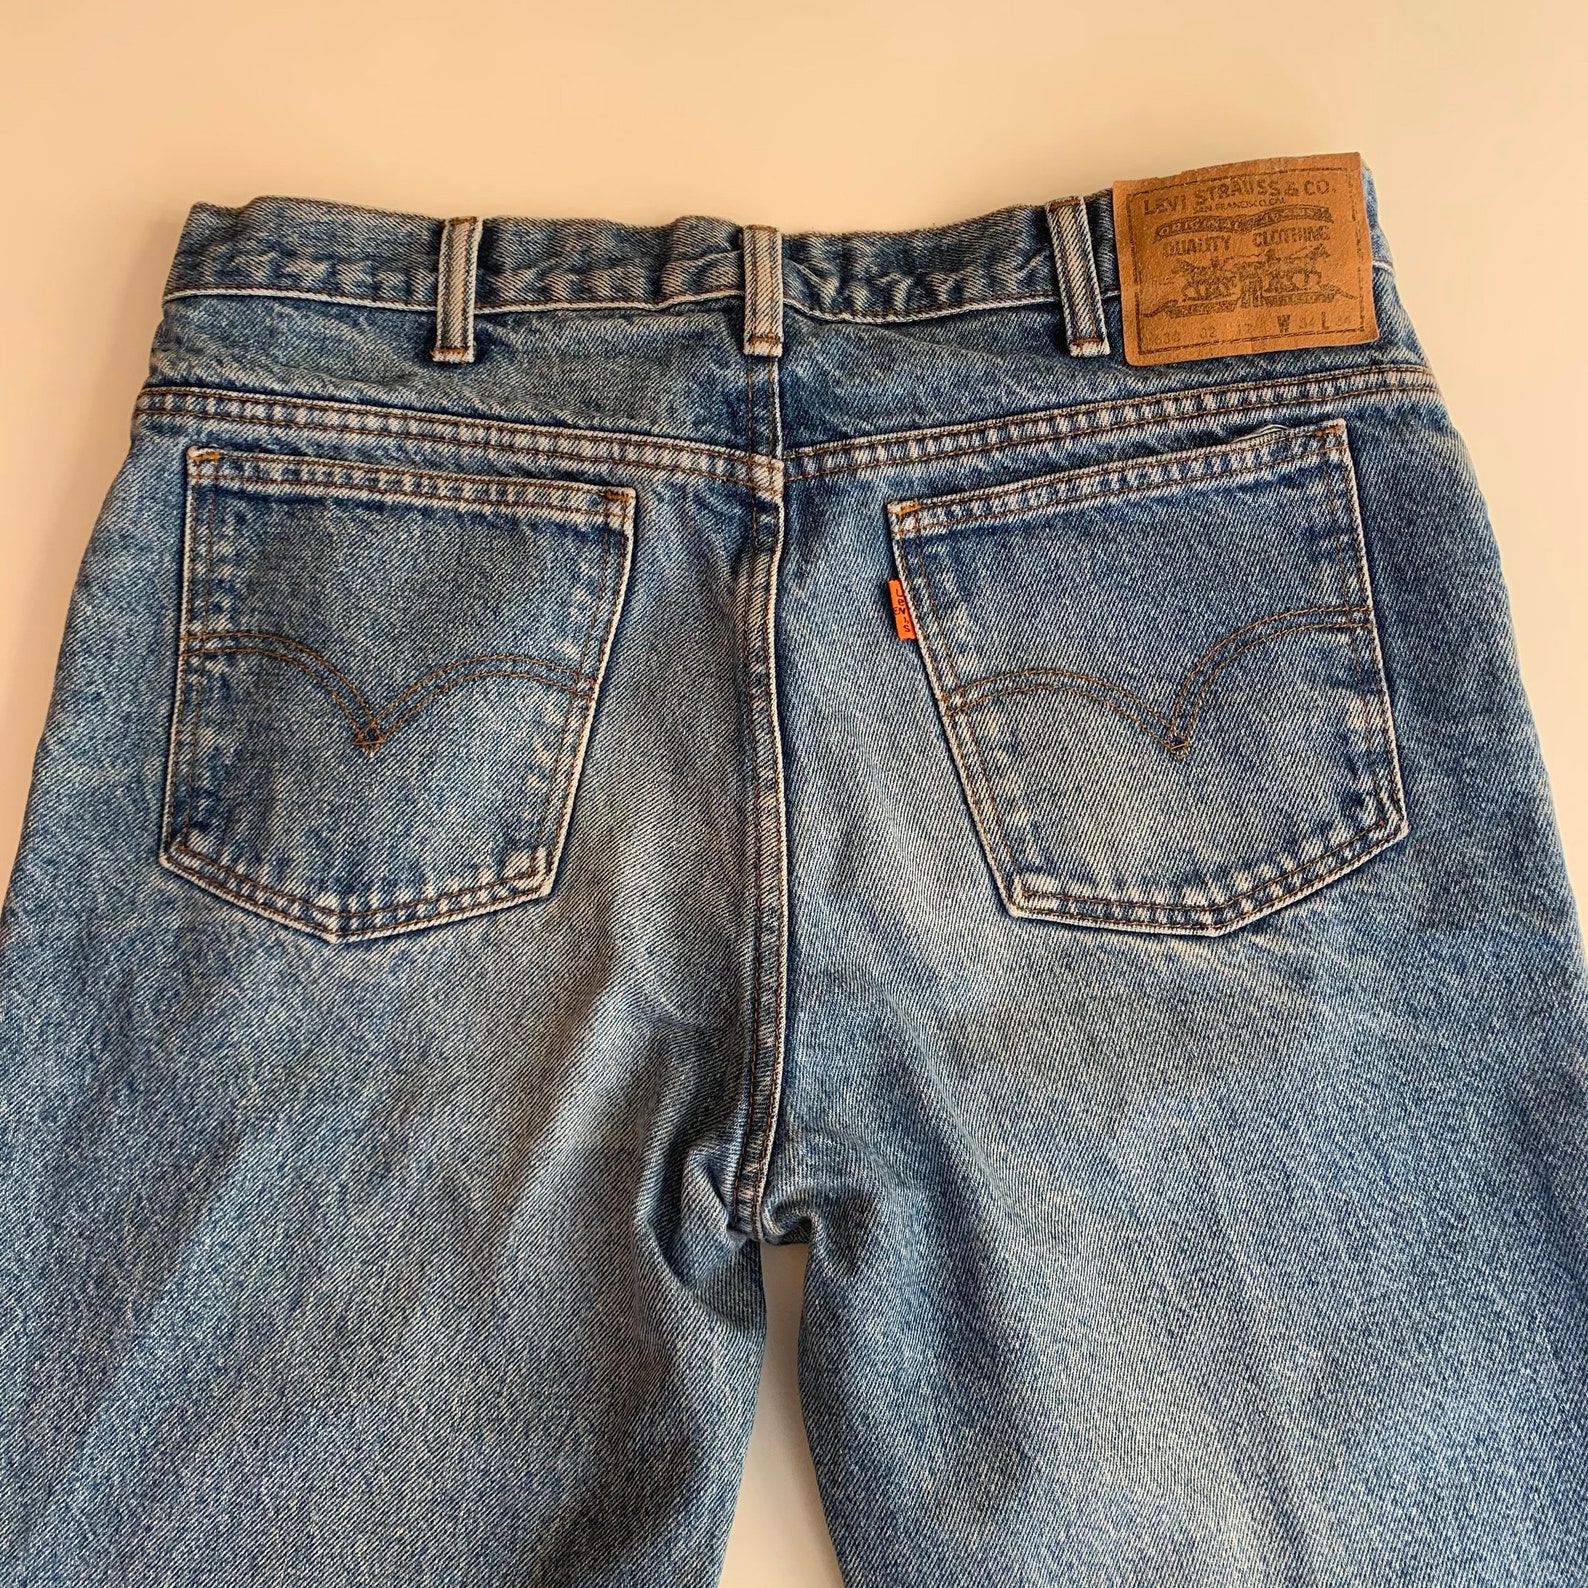 Levis 630 Jeans Original Levis Straus Denim Vintage orange | Etsy